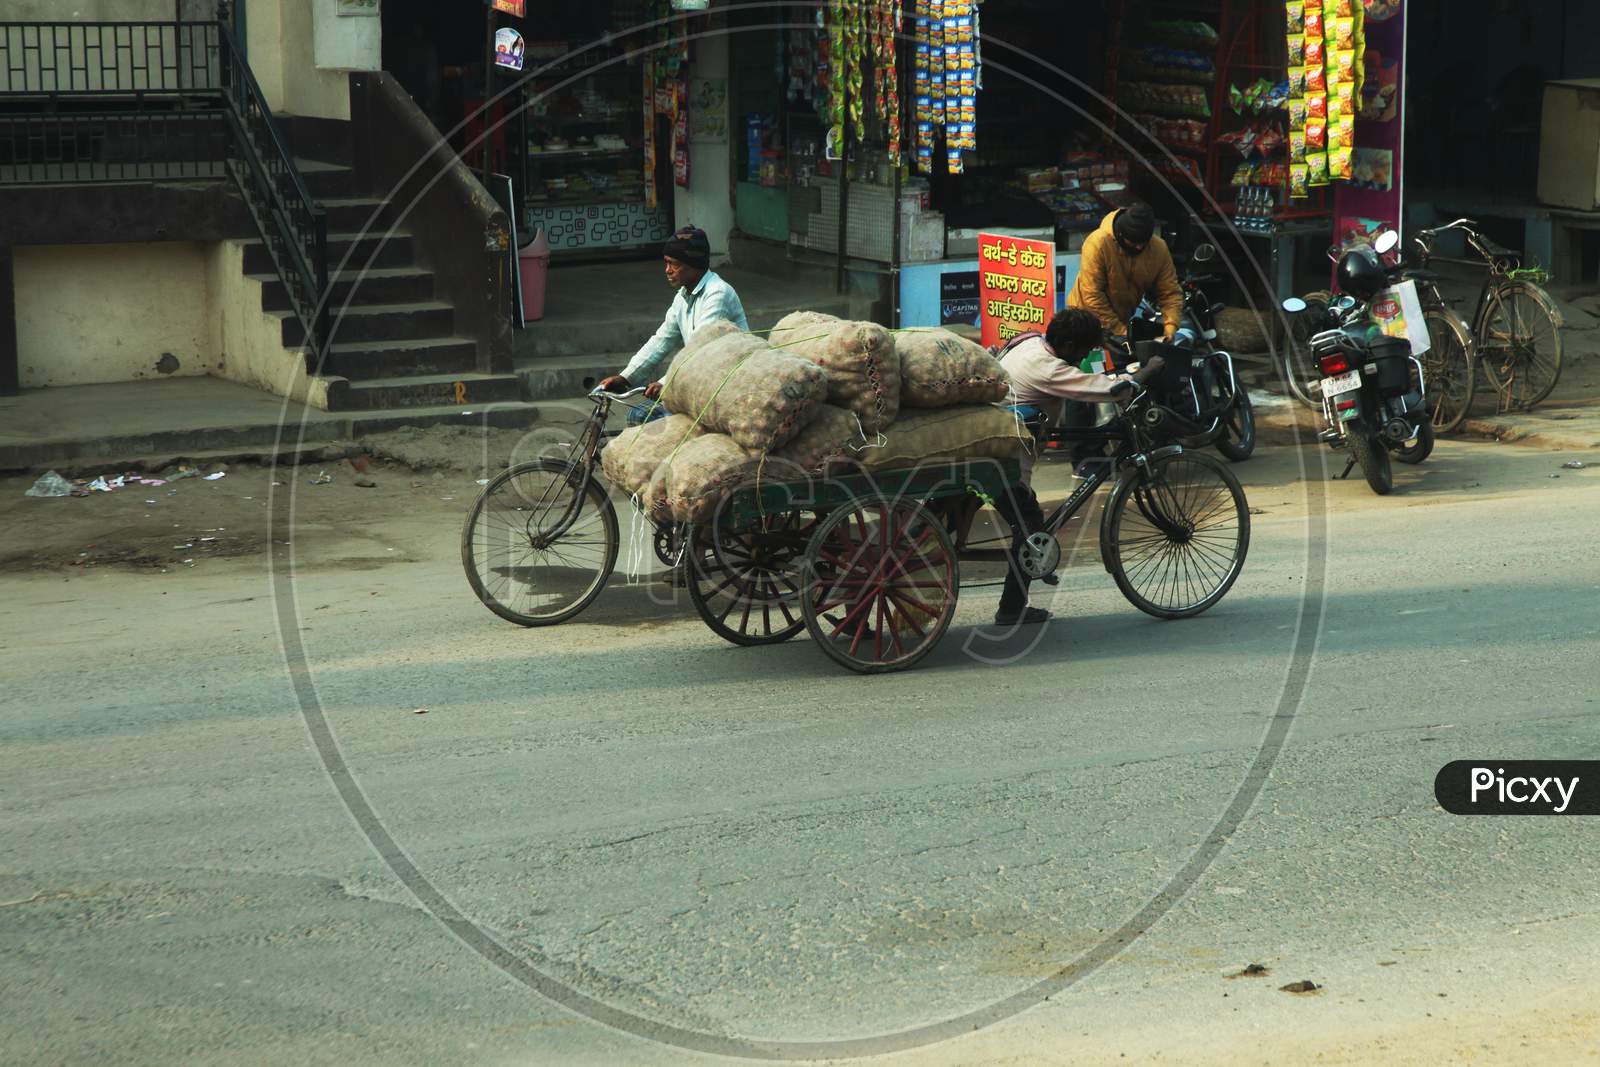 A Man with Rickshaw carrying onion Sacks